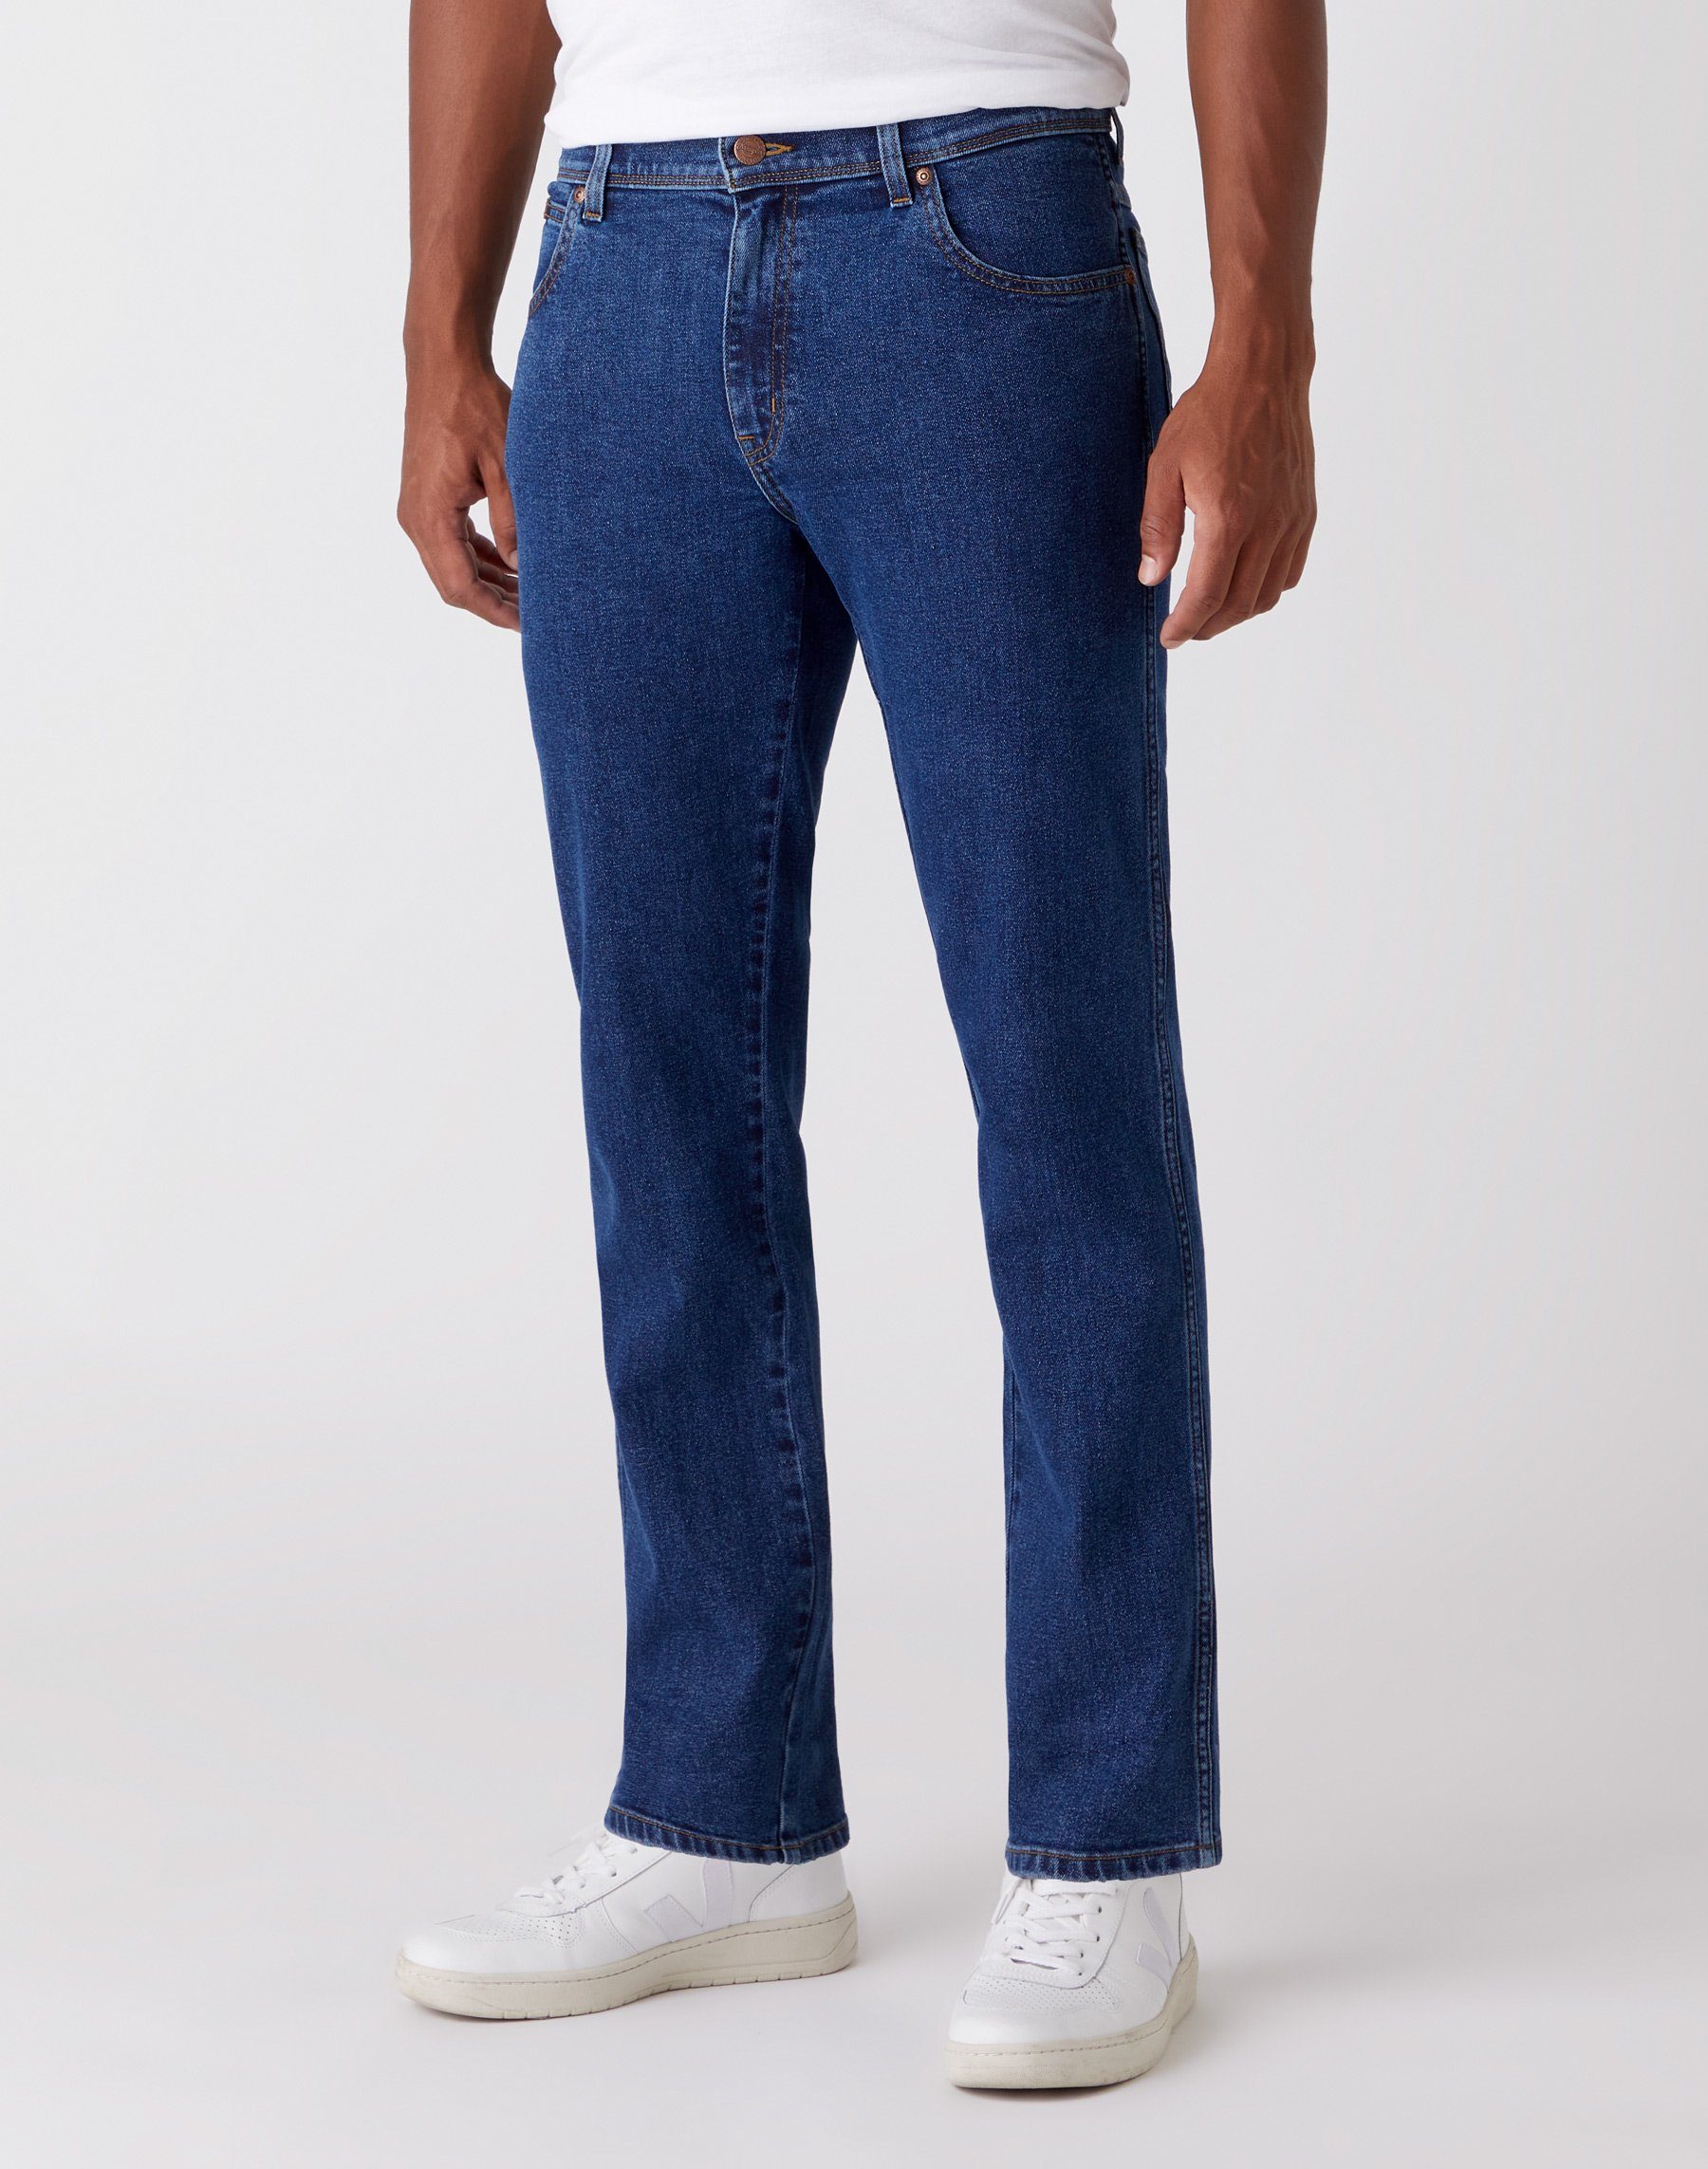 ride 5-Pocket-Jeans Wrangler TEXAS WRANGLER indigo W121U5225 on